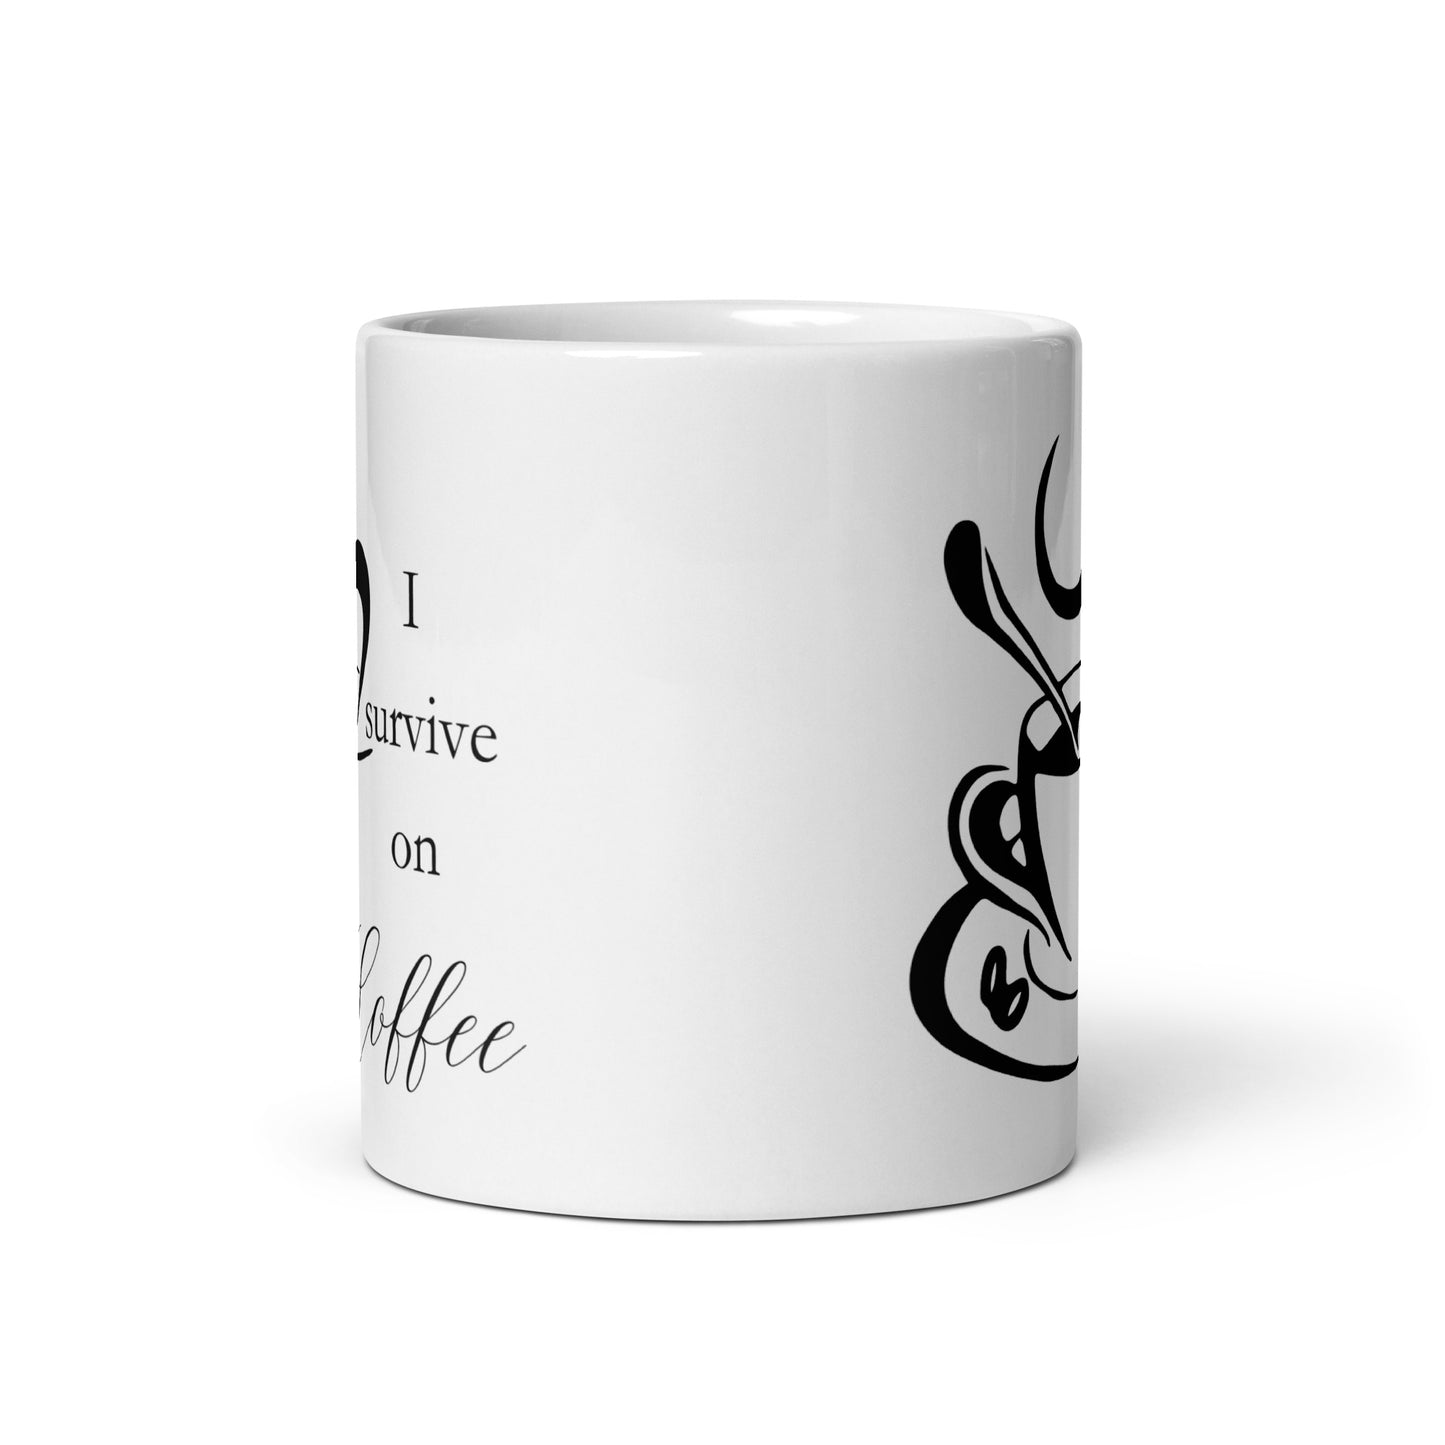 I Survive on Coffee Elegant White glossy mug